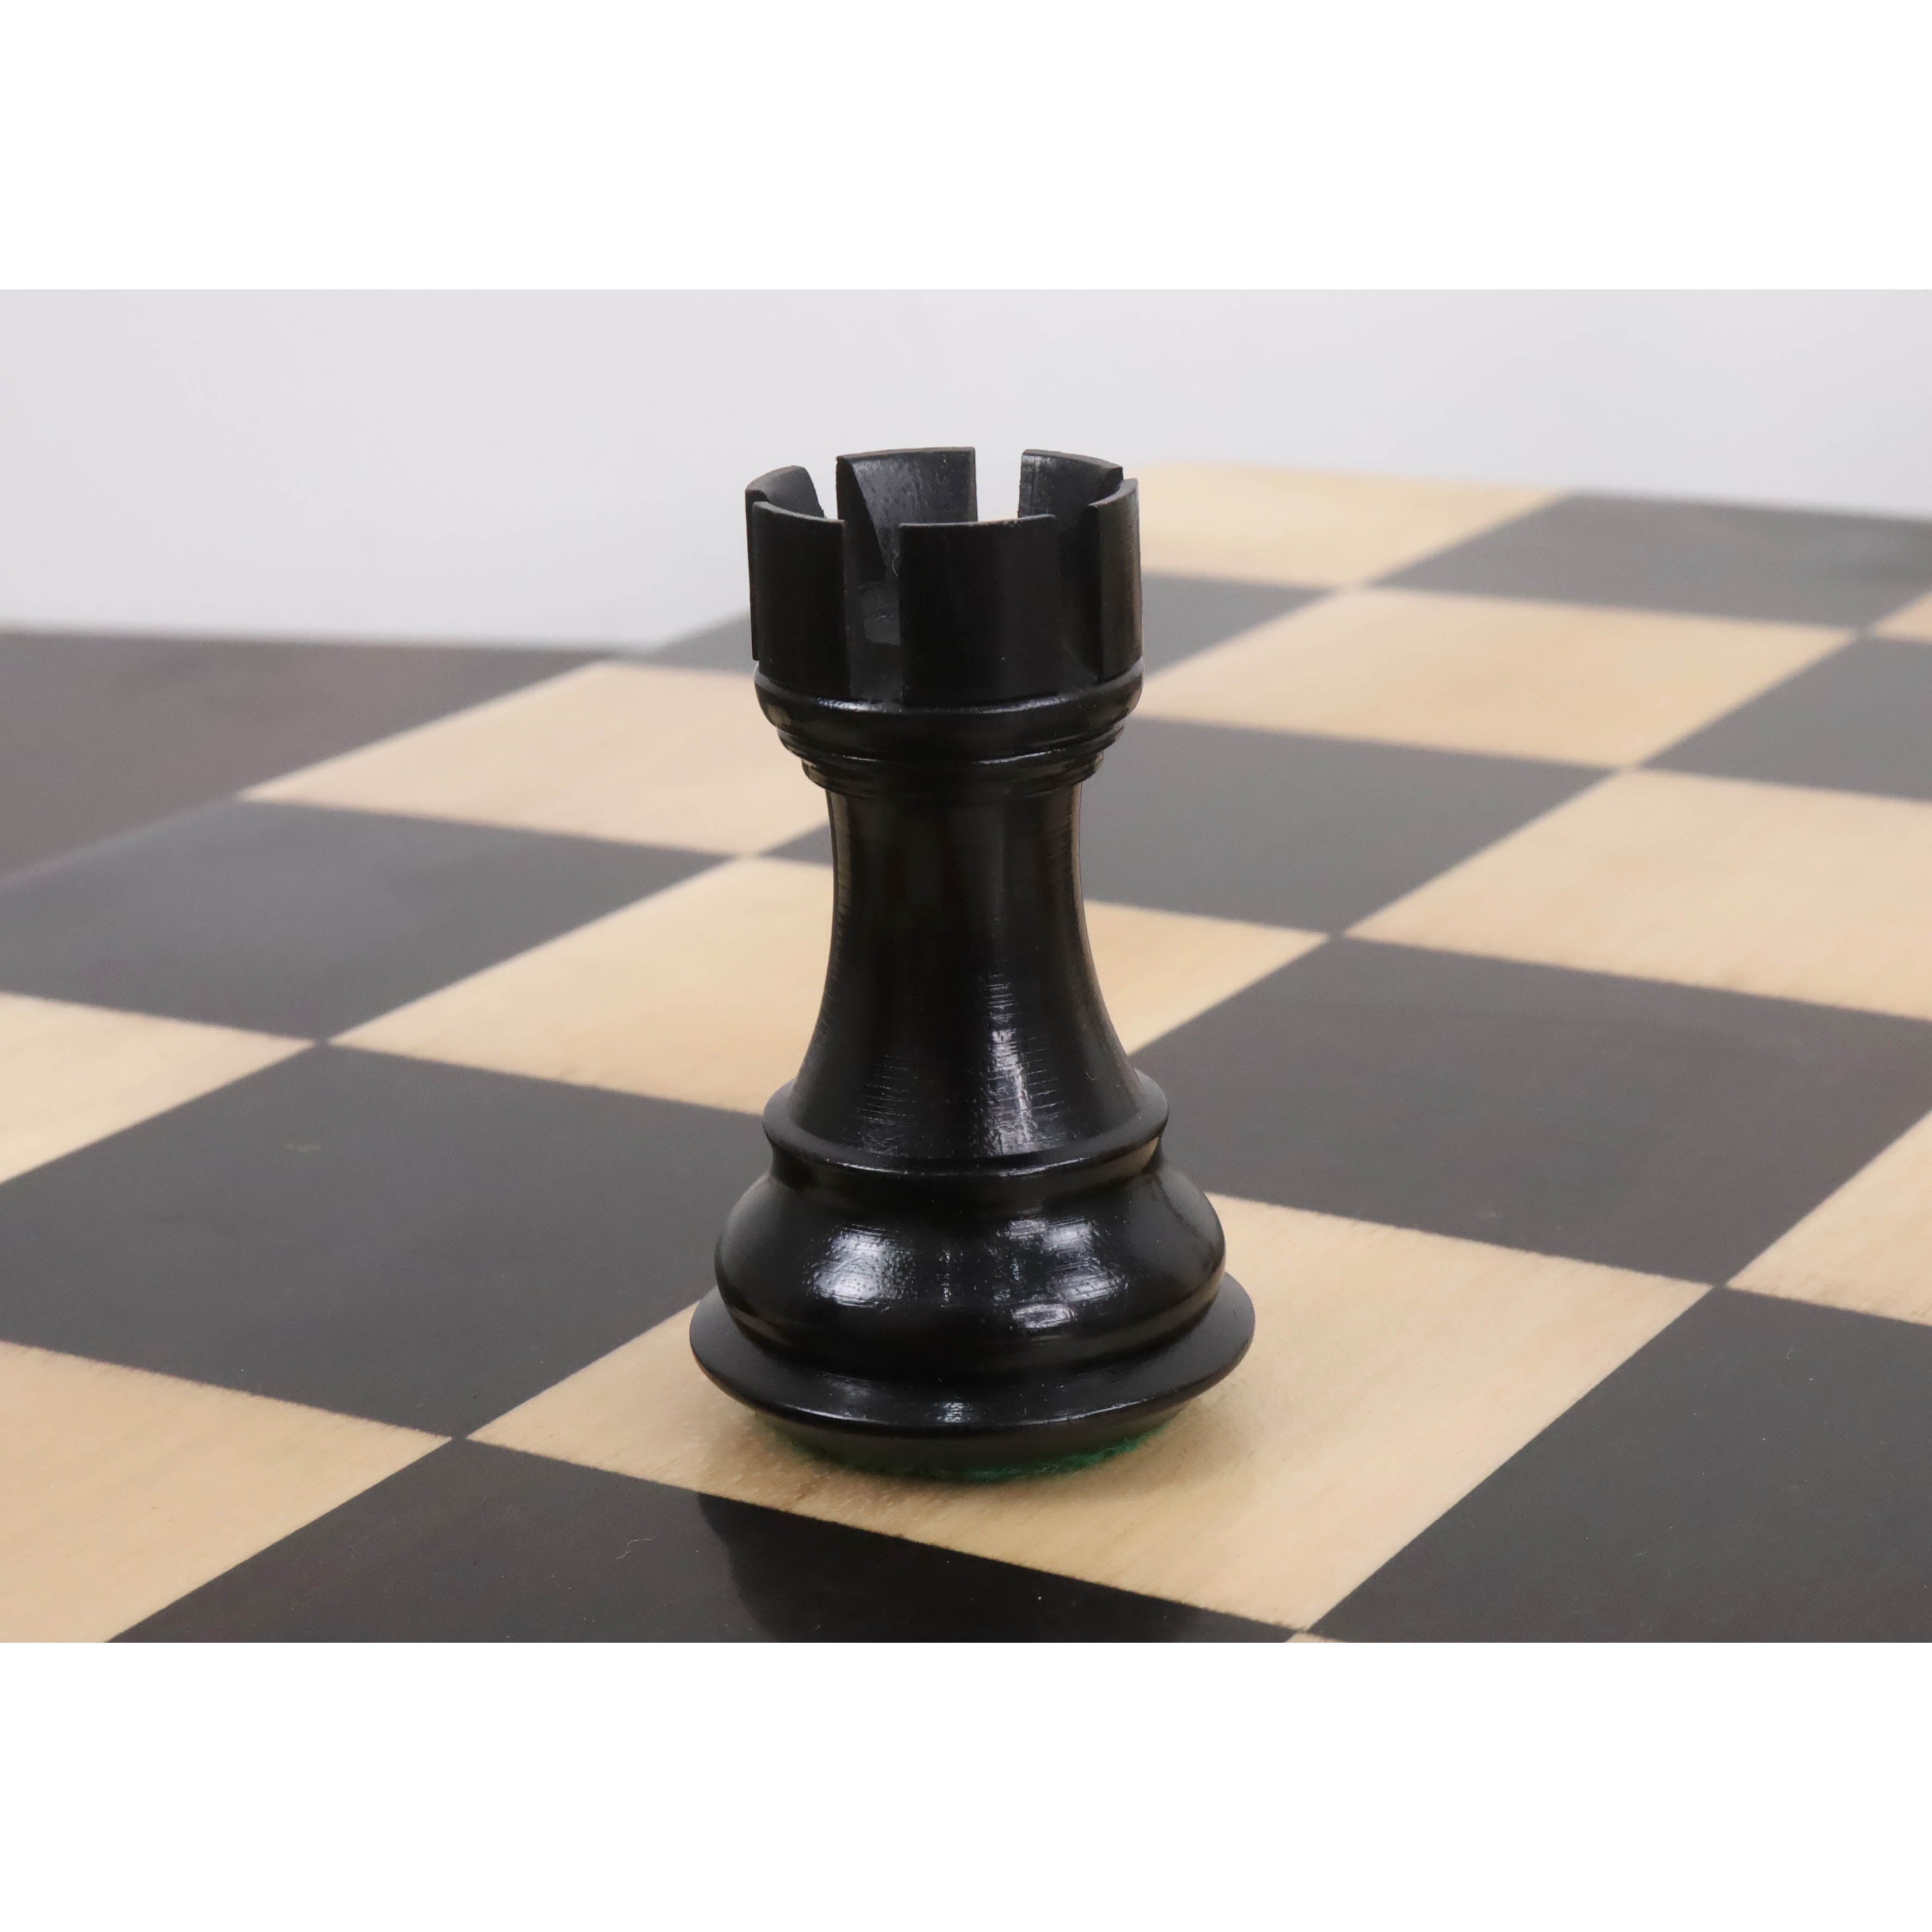 4" Bridle Staunton Luxury Chess Set- Chess Pieces Only - Ebony Wood & Boxwood